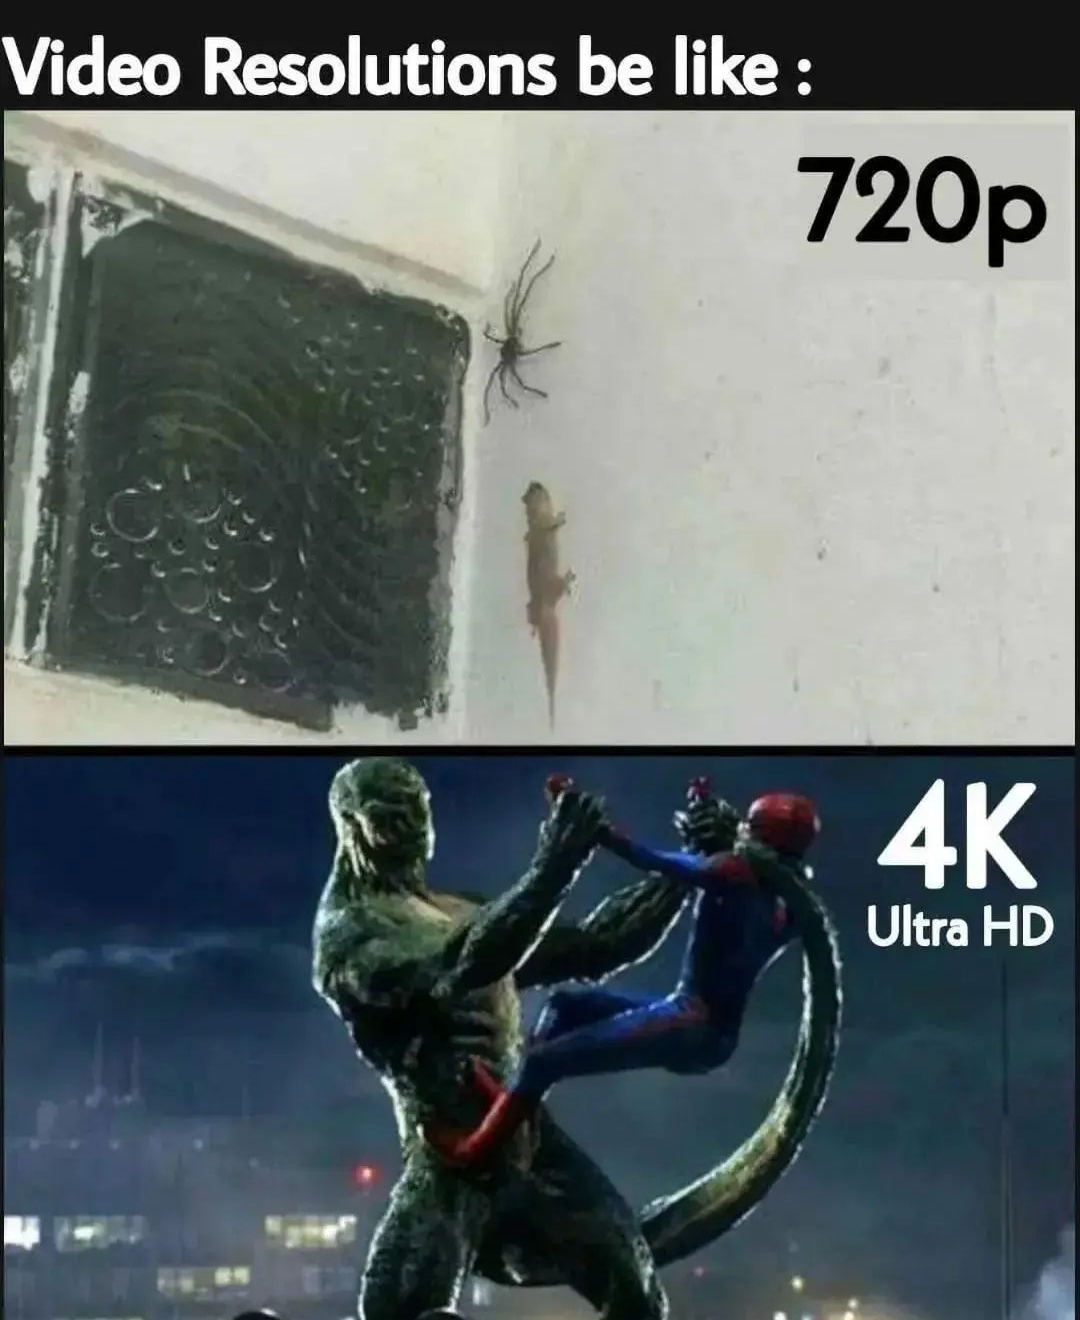 lizard spiderman - Video Resolutions be 720p 4K Ultra Hd